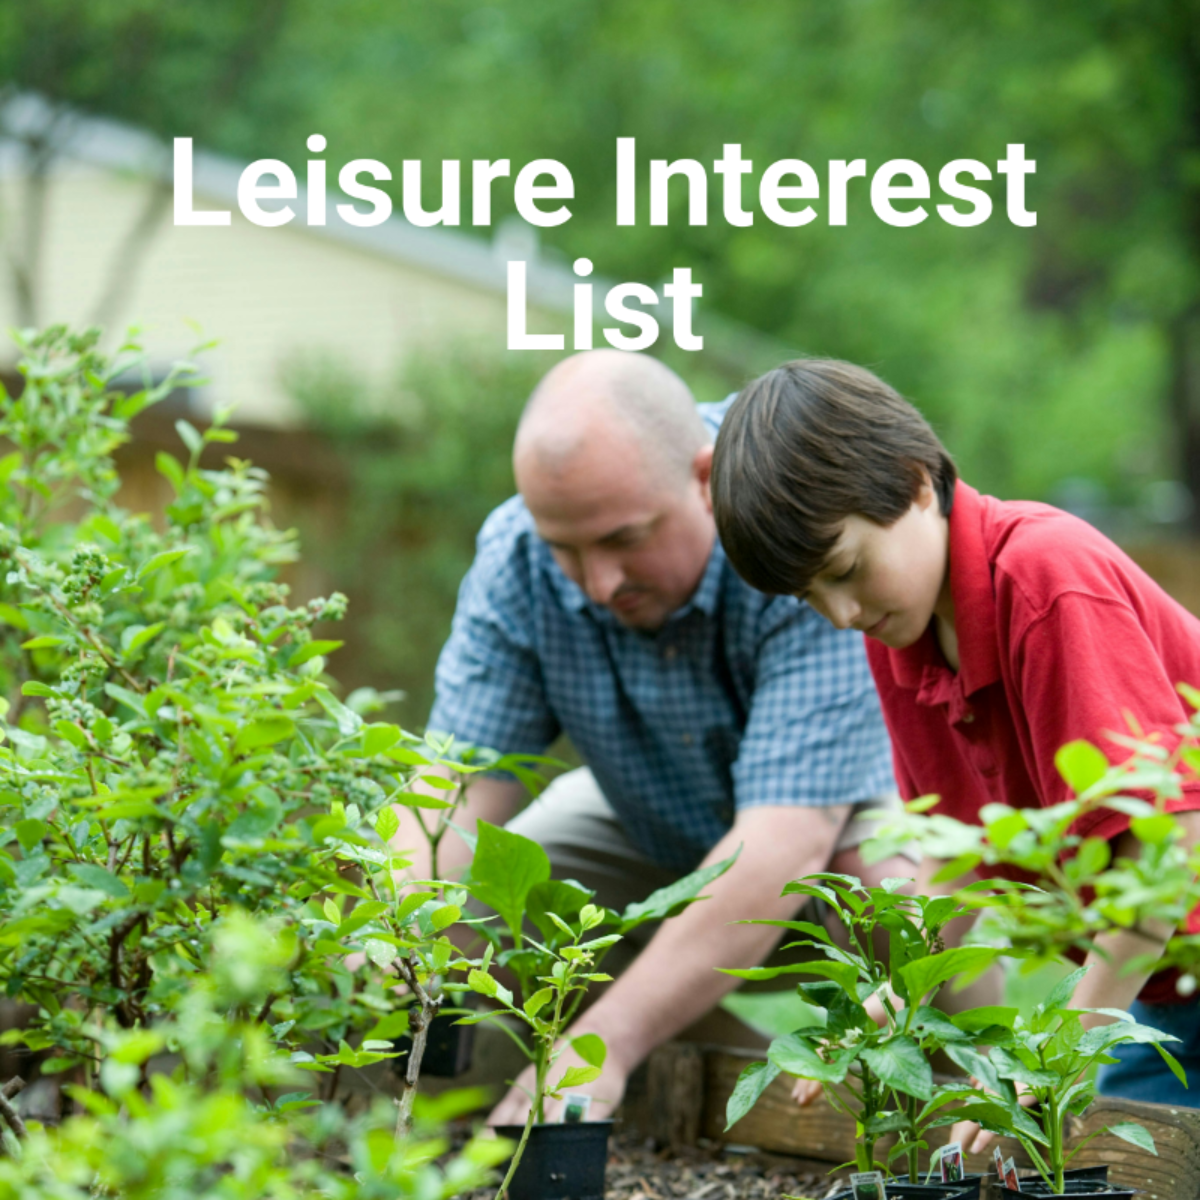 Leisure Interest List Template